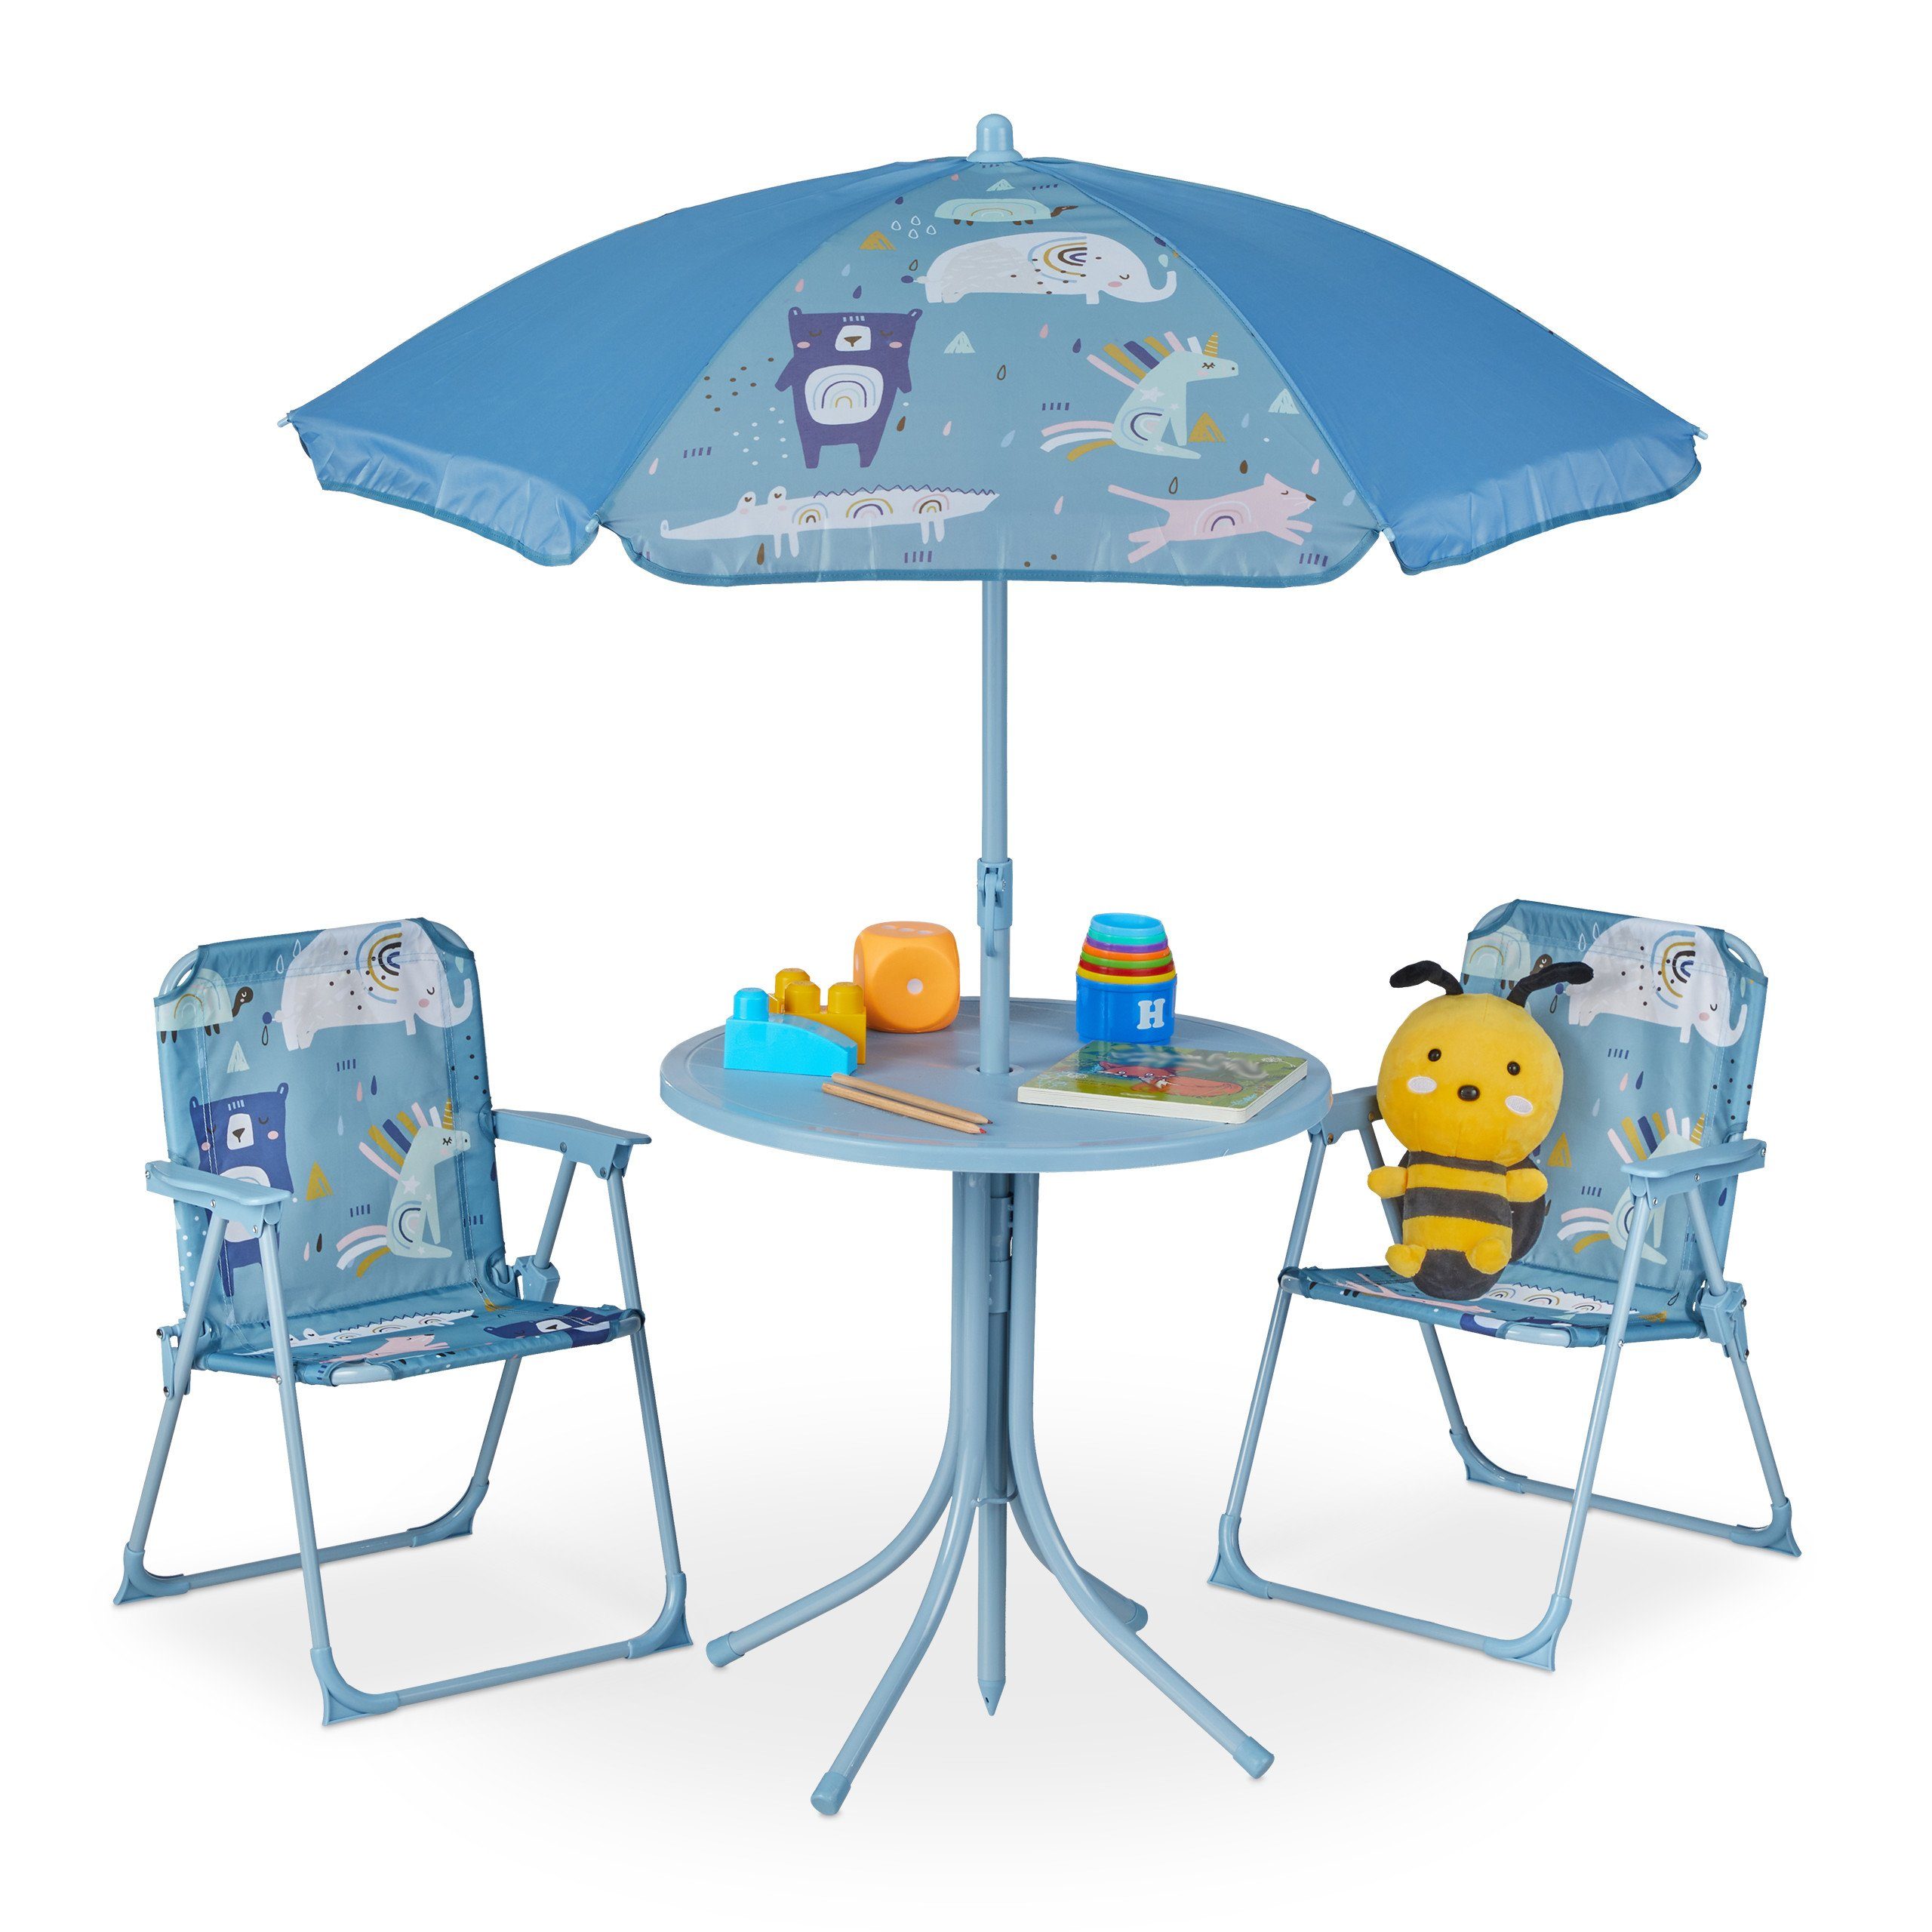 Blau relaxdays Camping Tiere Kindersitzgruppe Campingstuhl Schirm, mit